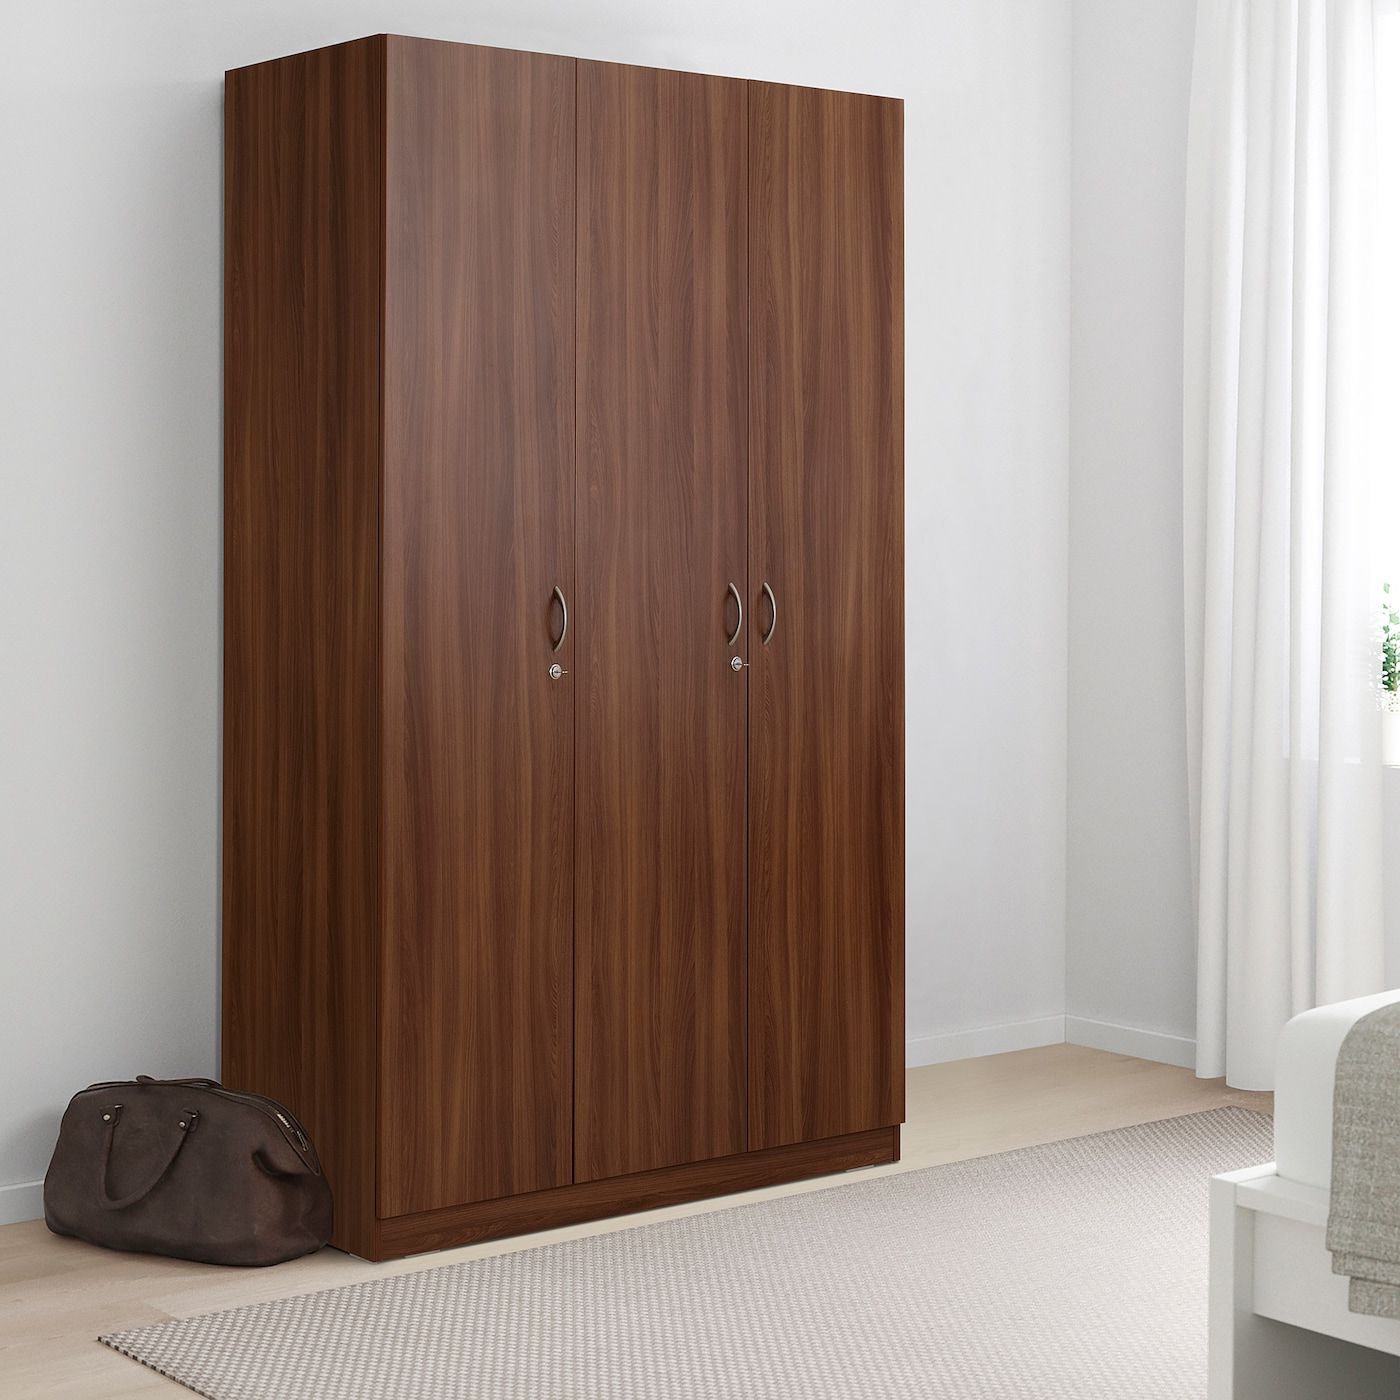 Nodeland Wardrobe With 3 Doors, Medium Brown, 120x52x202 Cm  (471/4x203/8x791/2") – Ikea Regarding Medium Size Wardrobes (View 9 of 20)